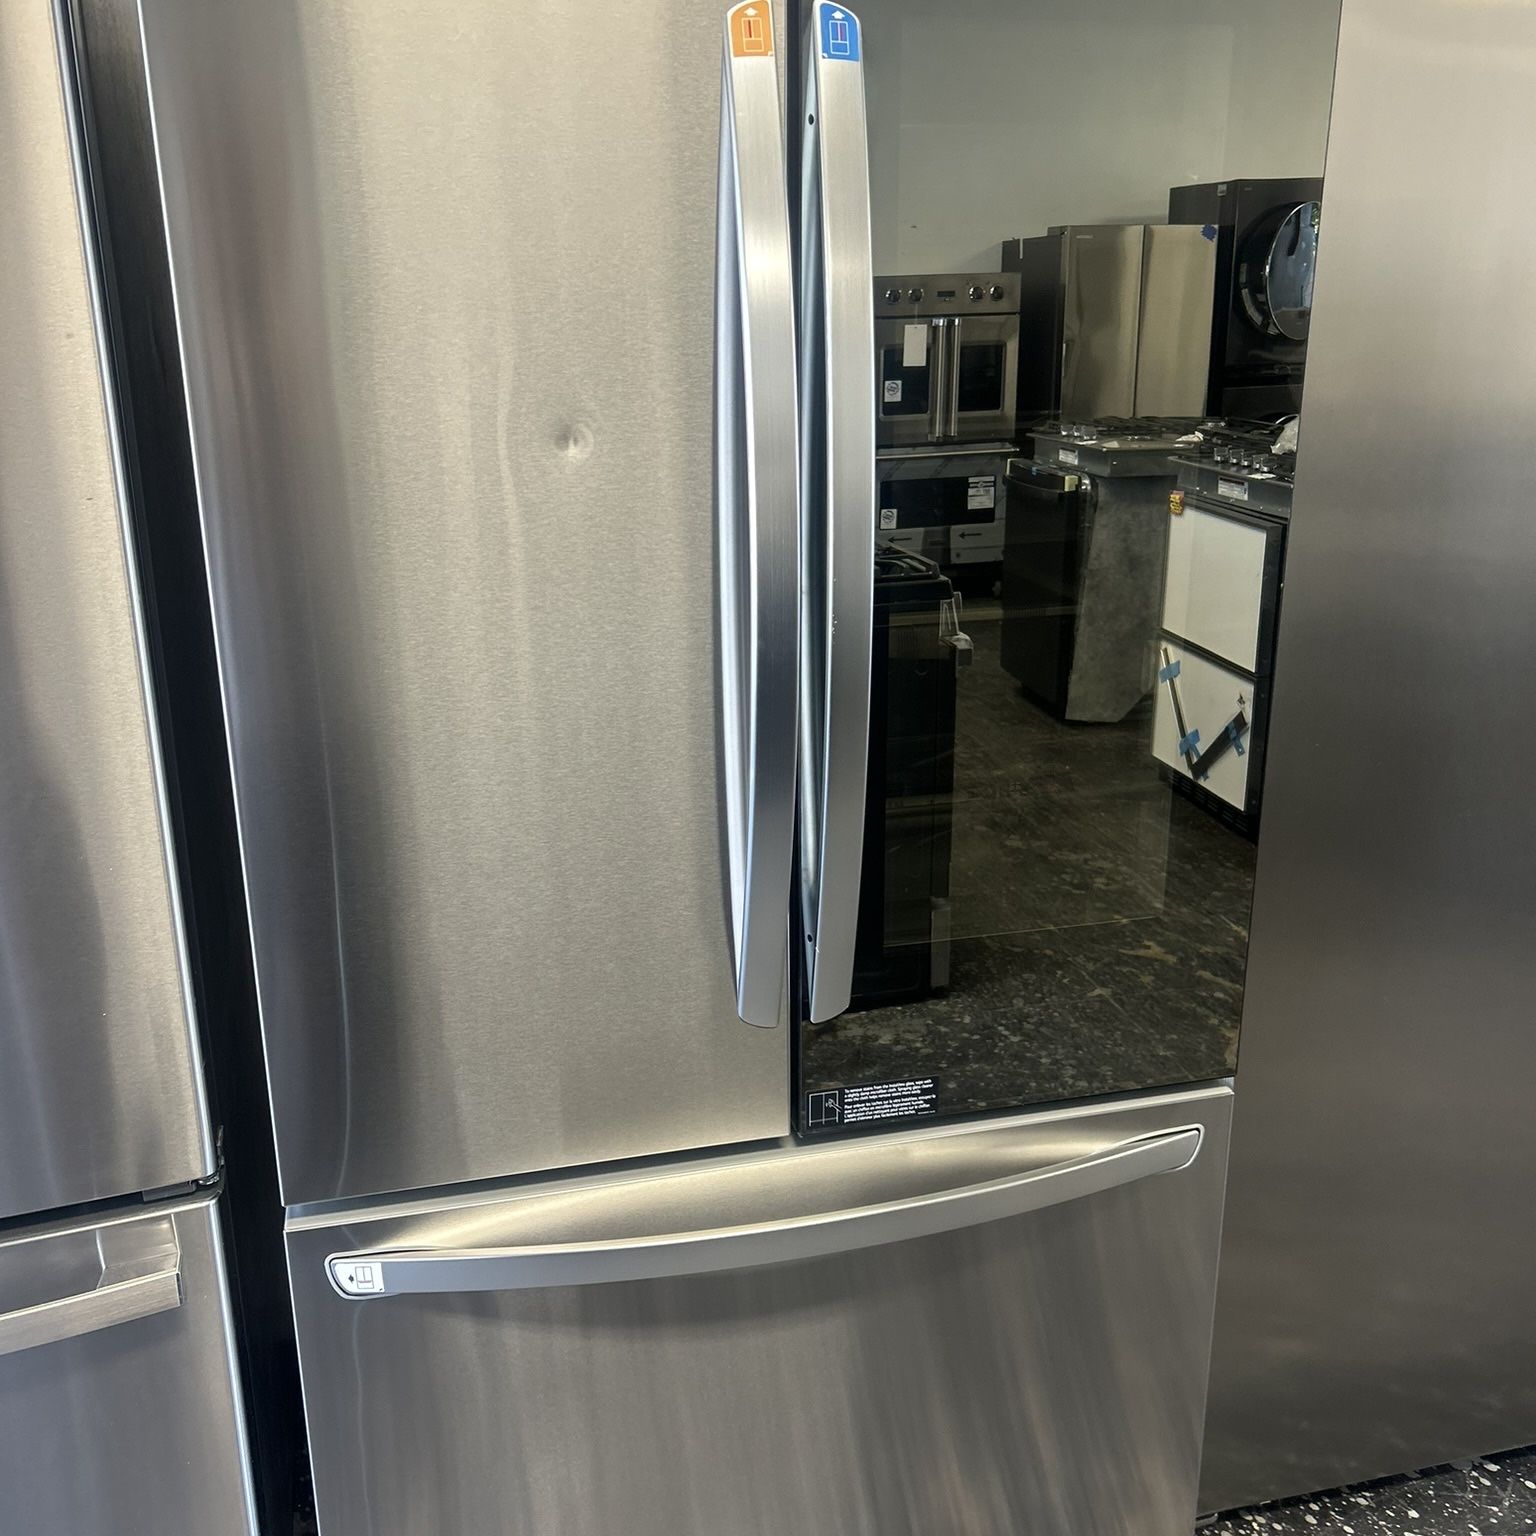 ‼️‼️ LG French Door Refrigerator Stainless Steel Water Dispenser Inside ‼️‼️